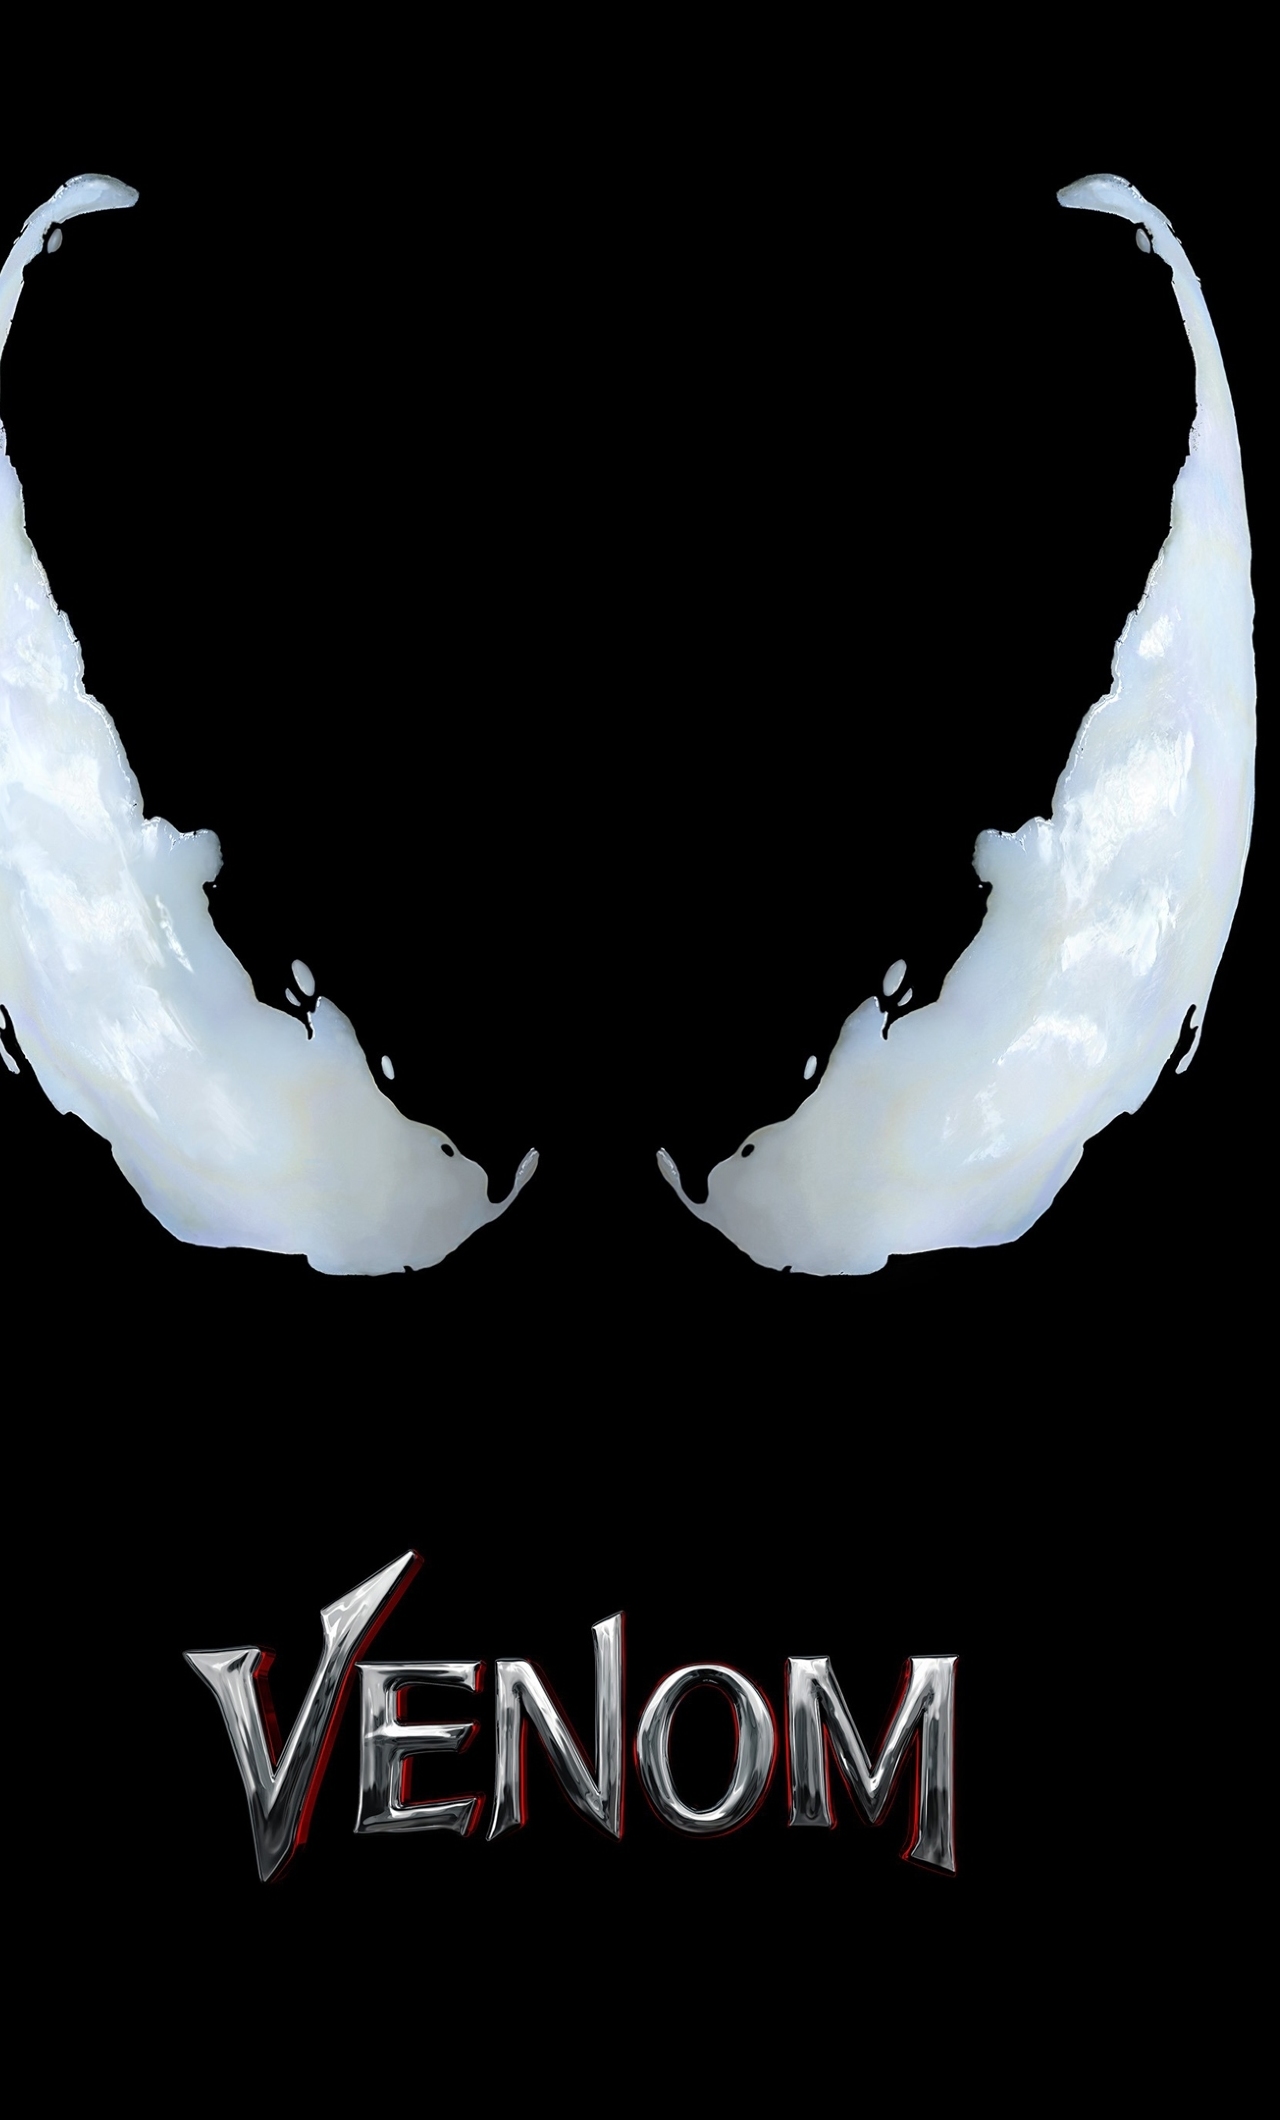 Venom 2018 Movie Poster 61714 - Venom Wallpaper Iphone 7 - HD Wallpaper 